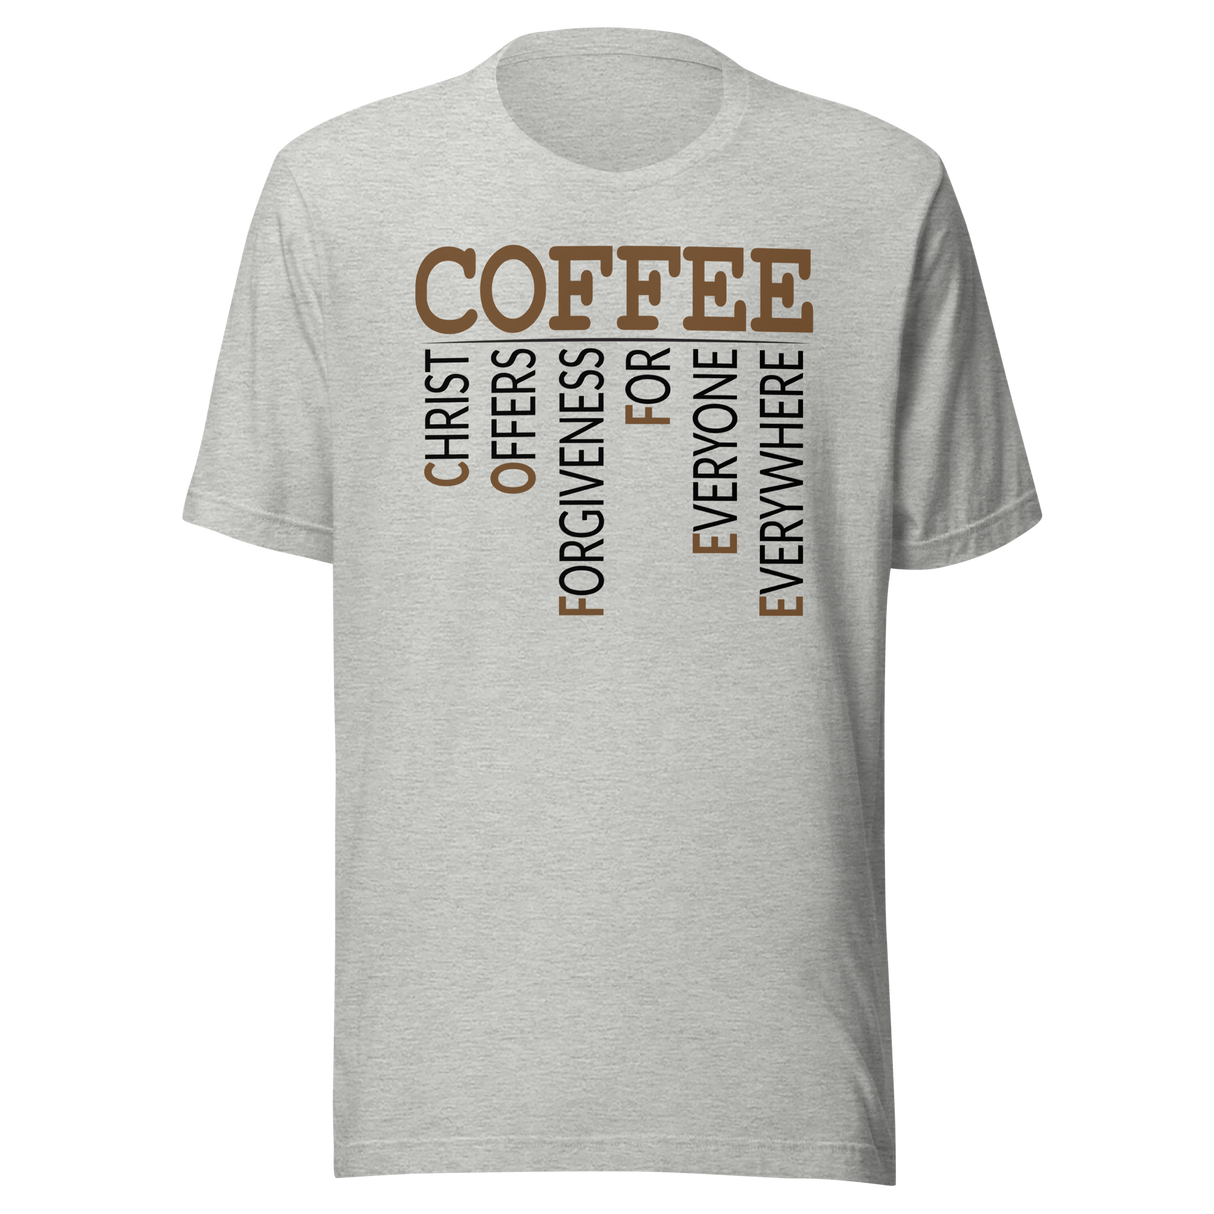 Coffee Christ Offers Forgiveness For Everyone Everywhere - Faith Tee - Grace T-Shirt - Forgiveness Tee - Redemption T-Shirt - Faith Tee